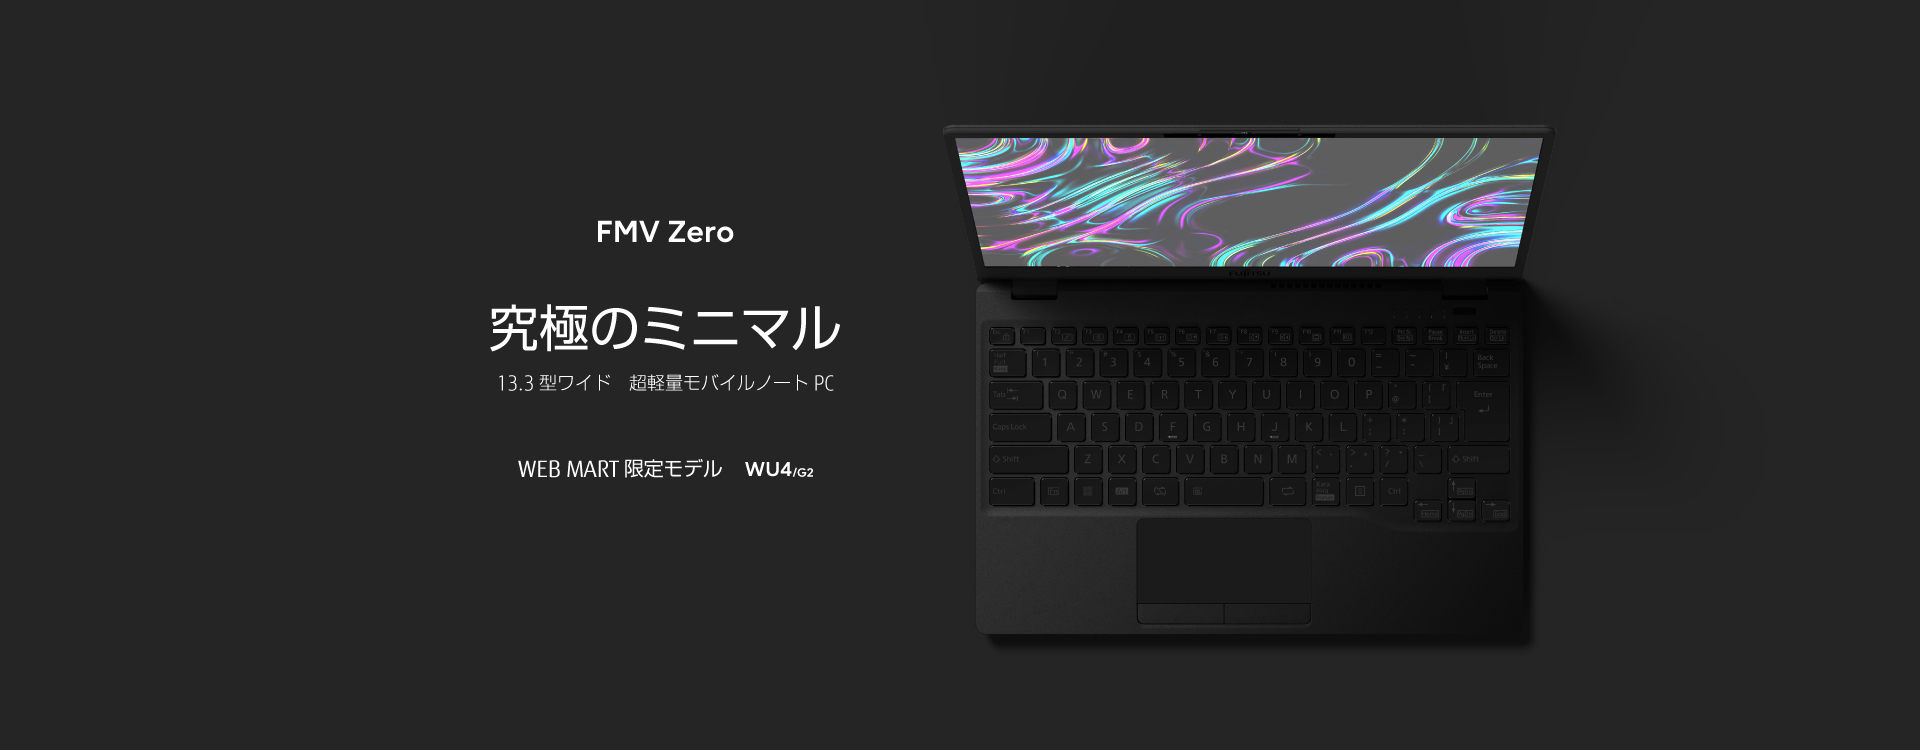 FMV Zero 究極のミニマル 13.3型ワイド 超軽量モバイルノートPC WEBMART 限定モデル WU4/G2